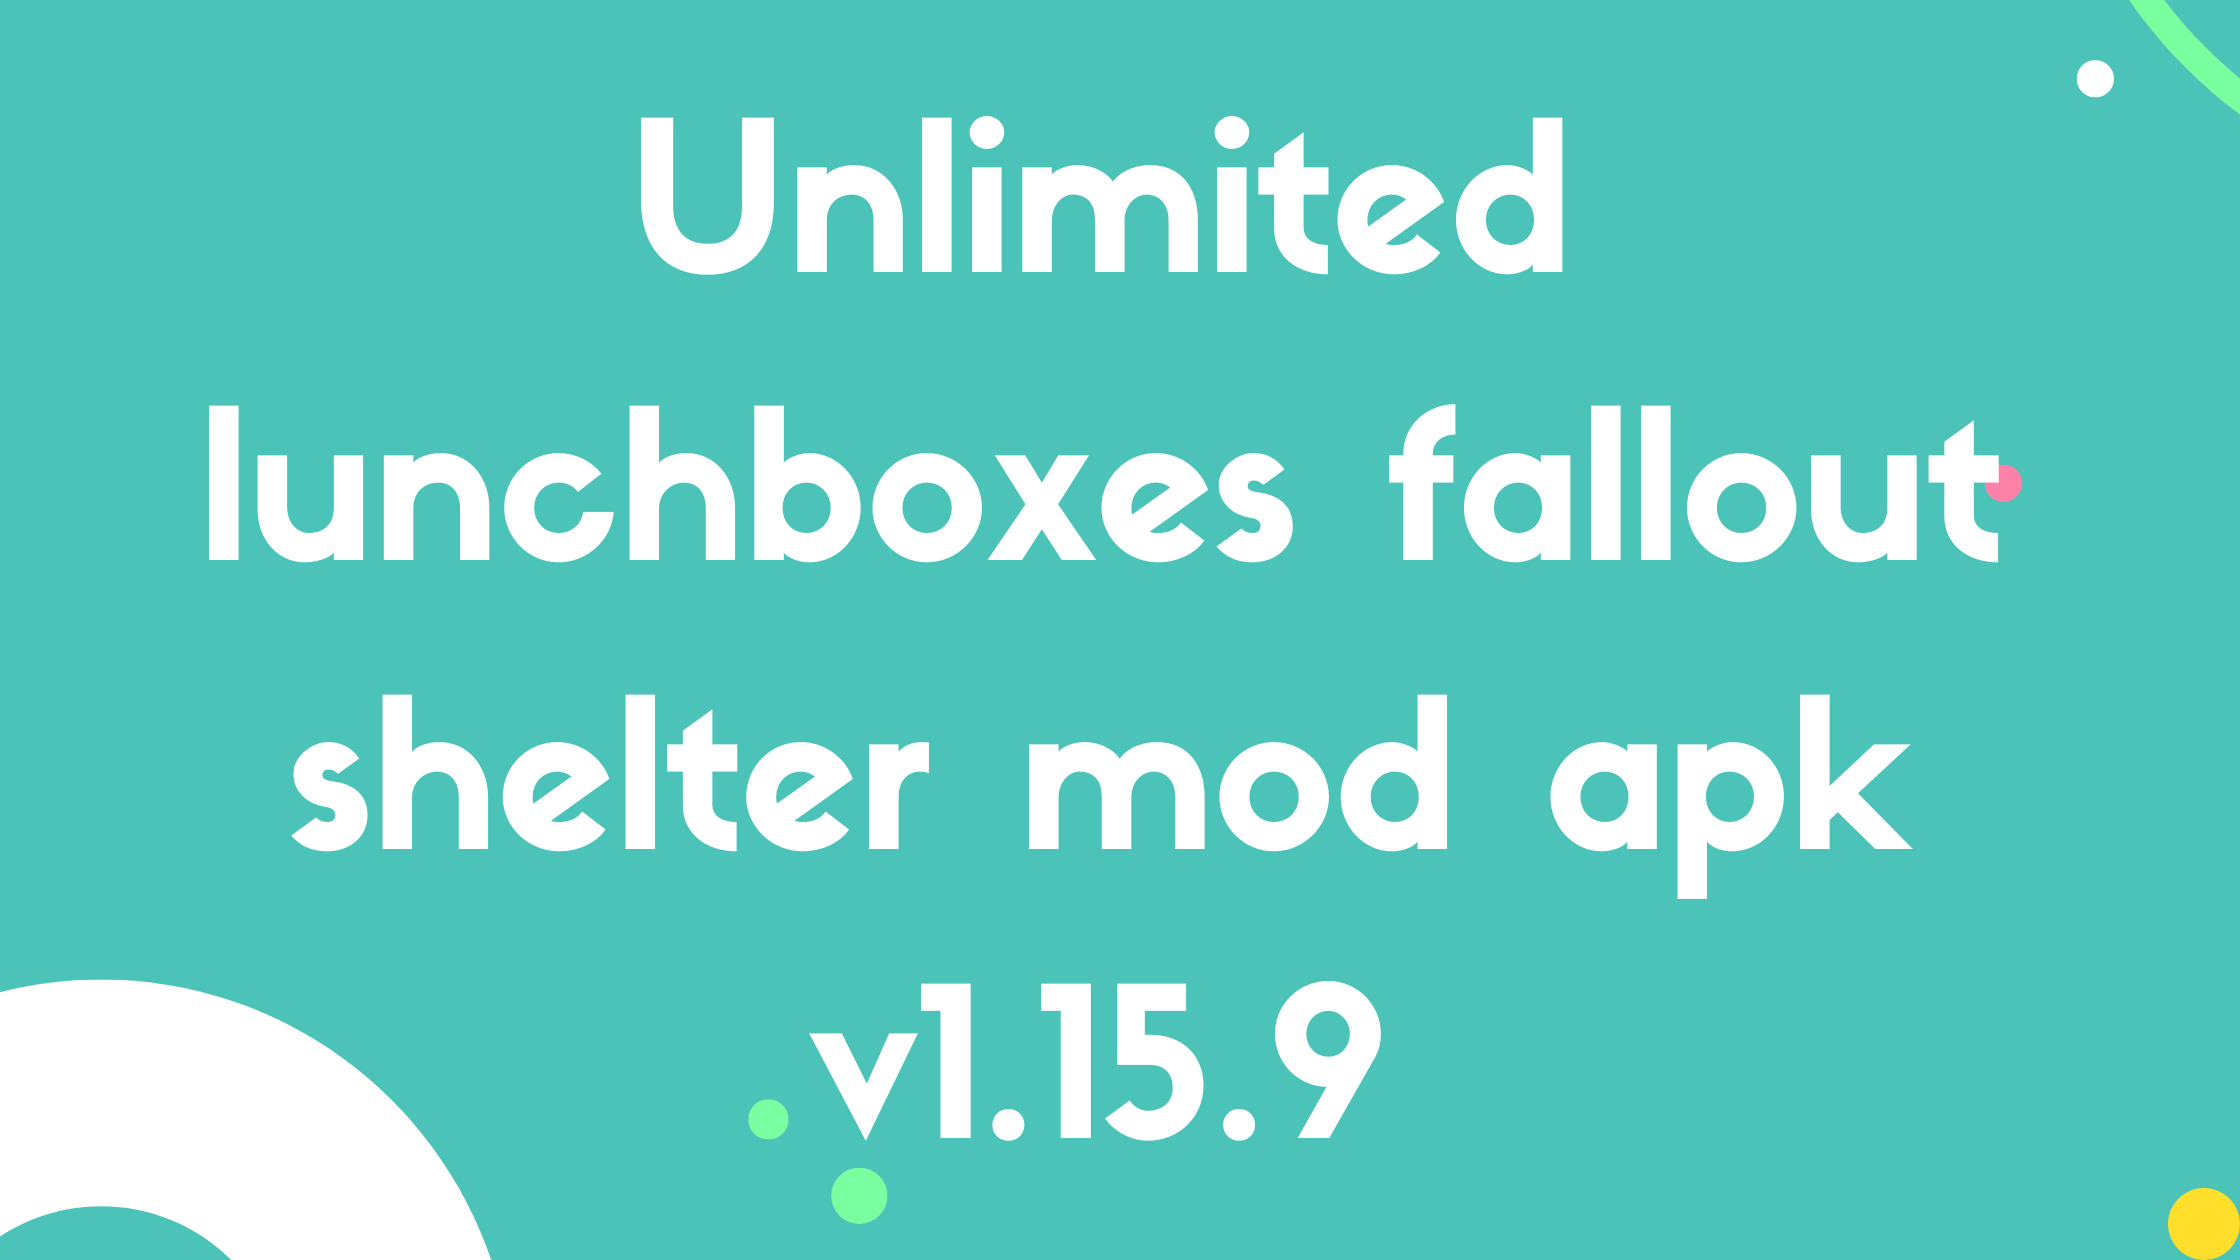 Unlimited lunchboxes fallout shelter mod apk v1.15.9